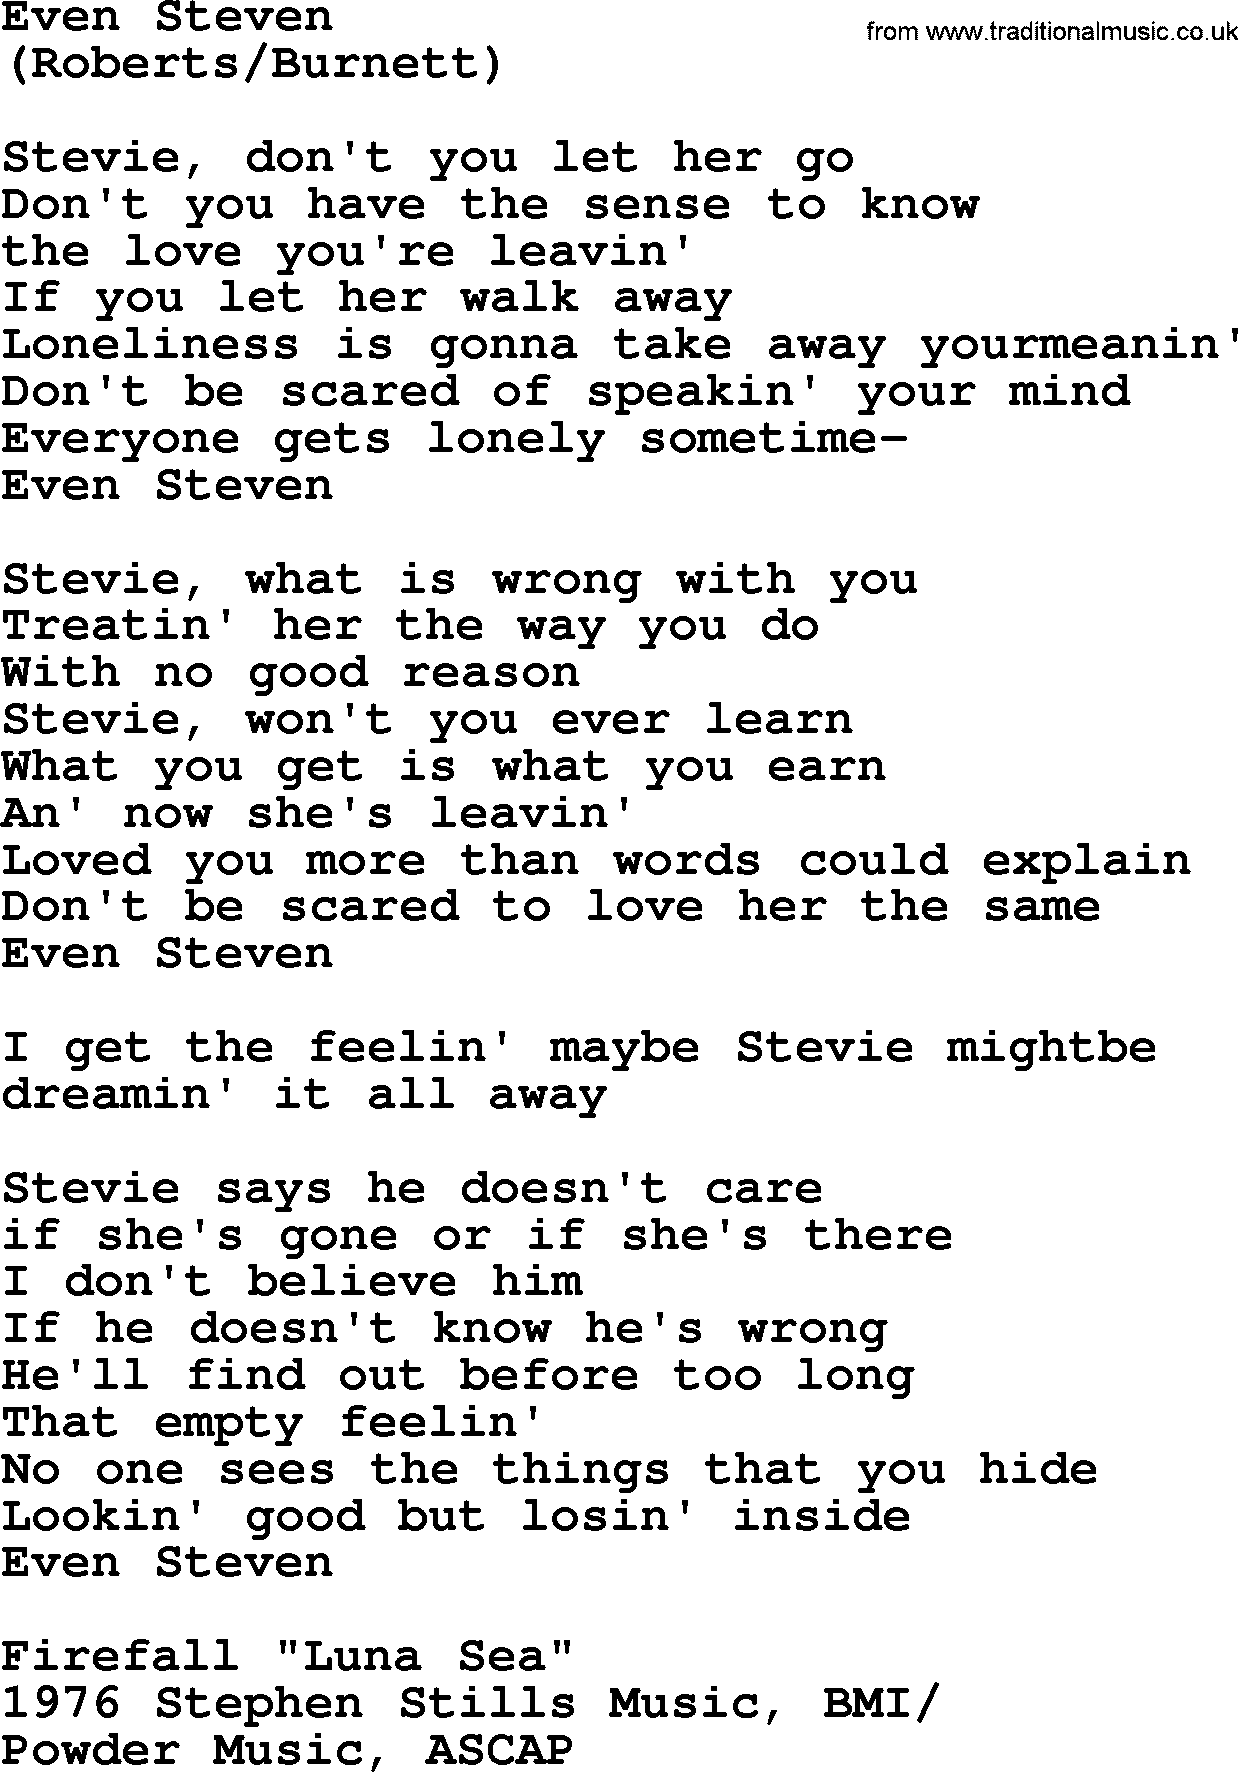 The Byrds song Even Steven, lyrics